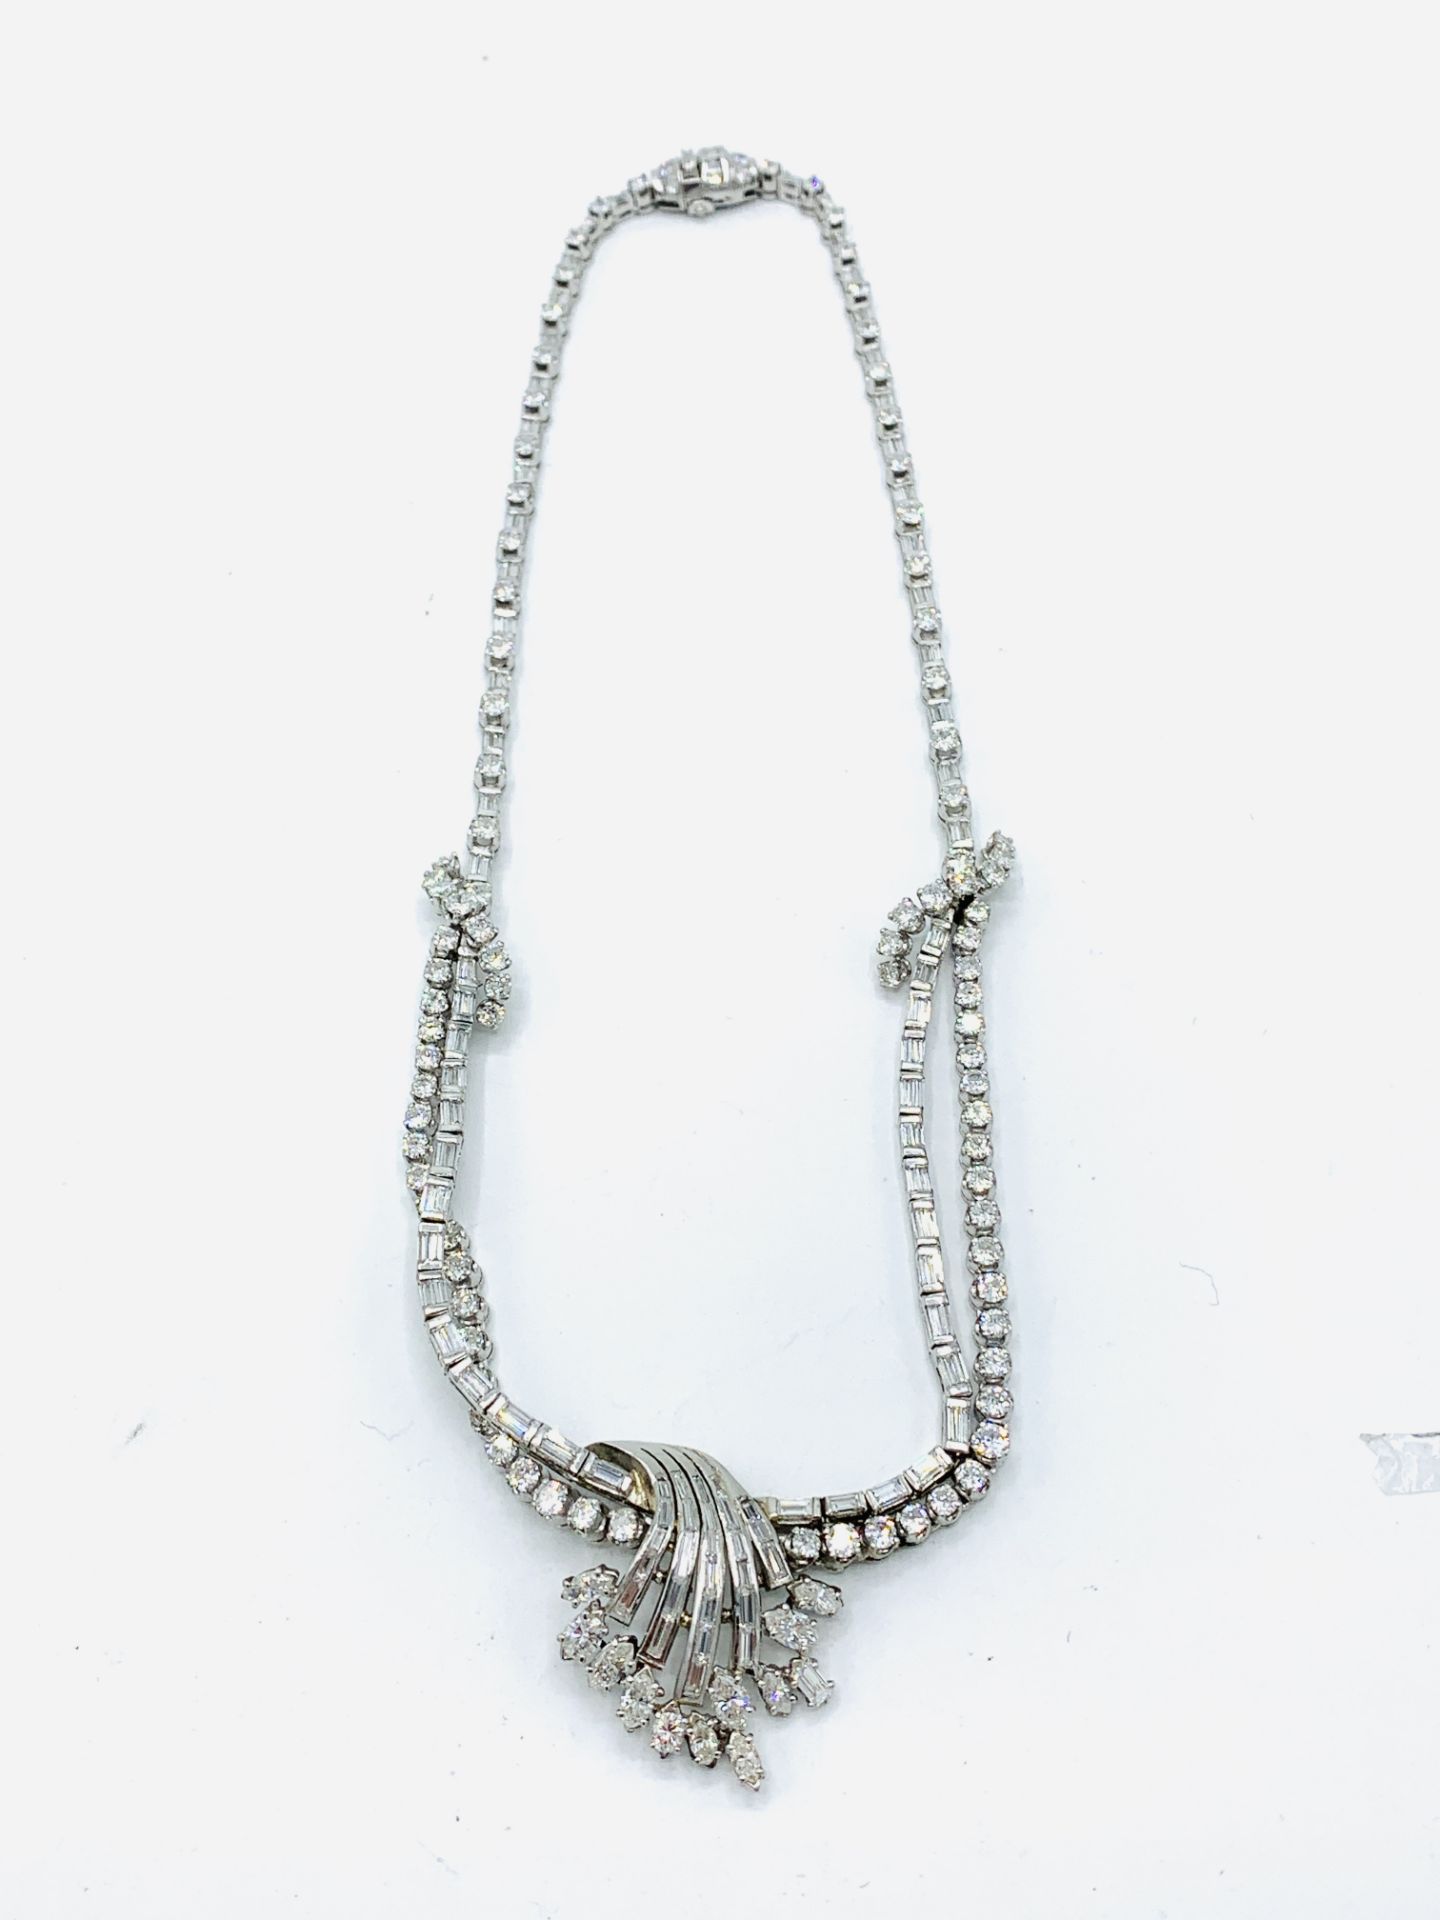 White gold diamond necklace - Image 6 of 10